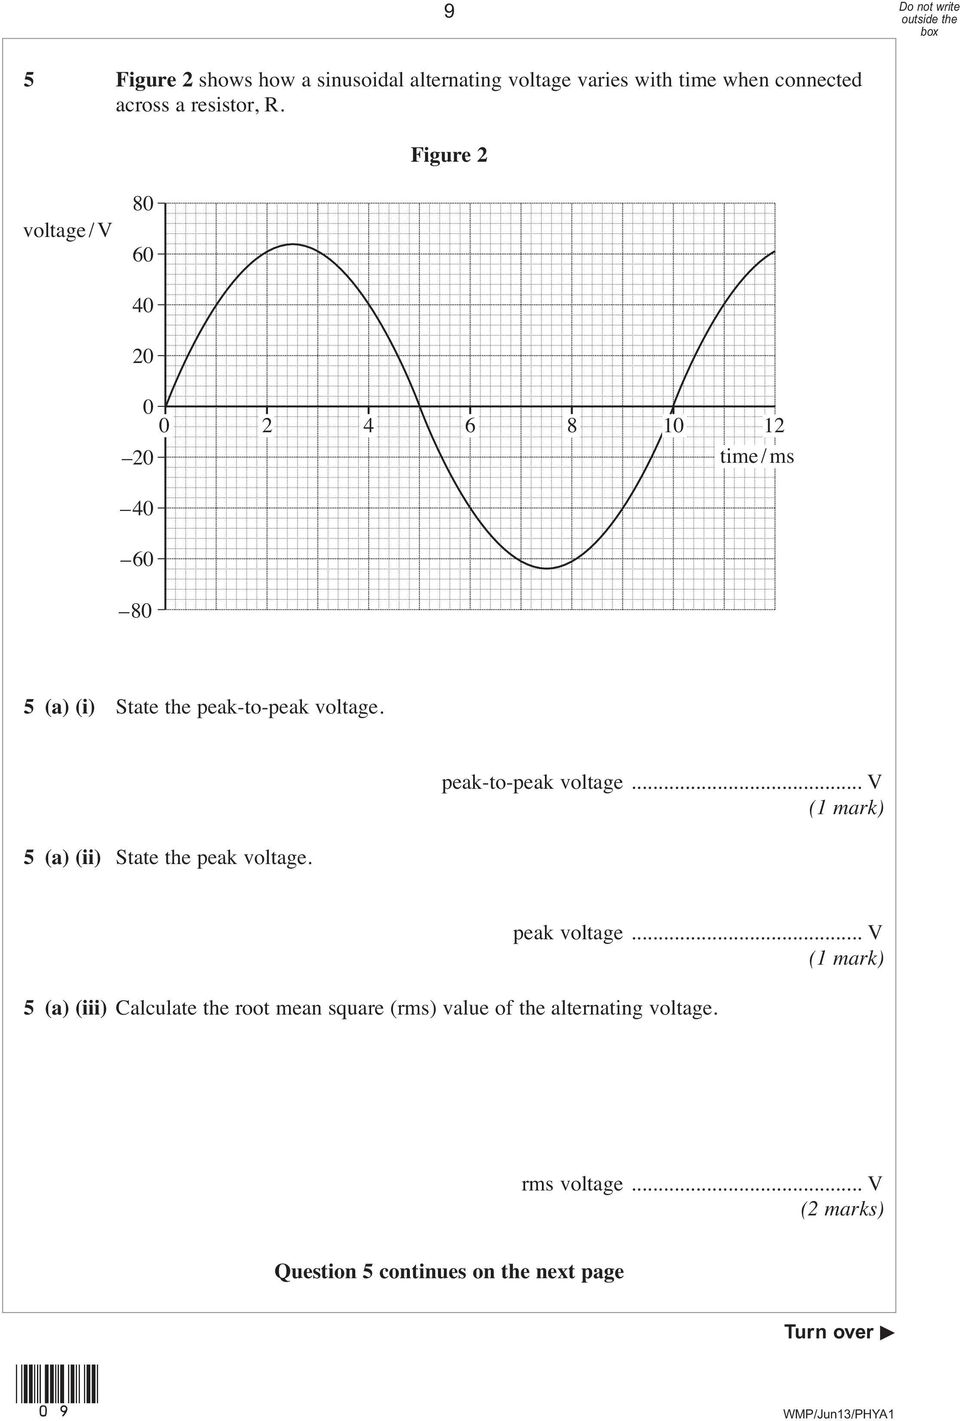 5 (a) (ii) State the peak voltage. peak-to-peak voltage... V peak voltage.